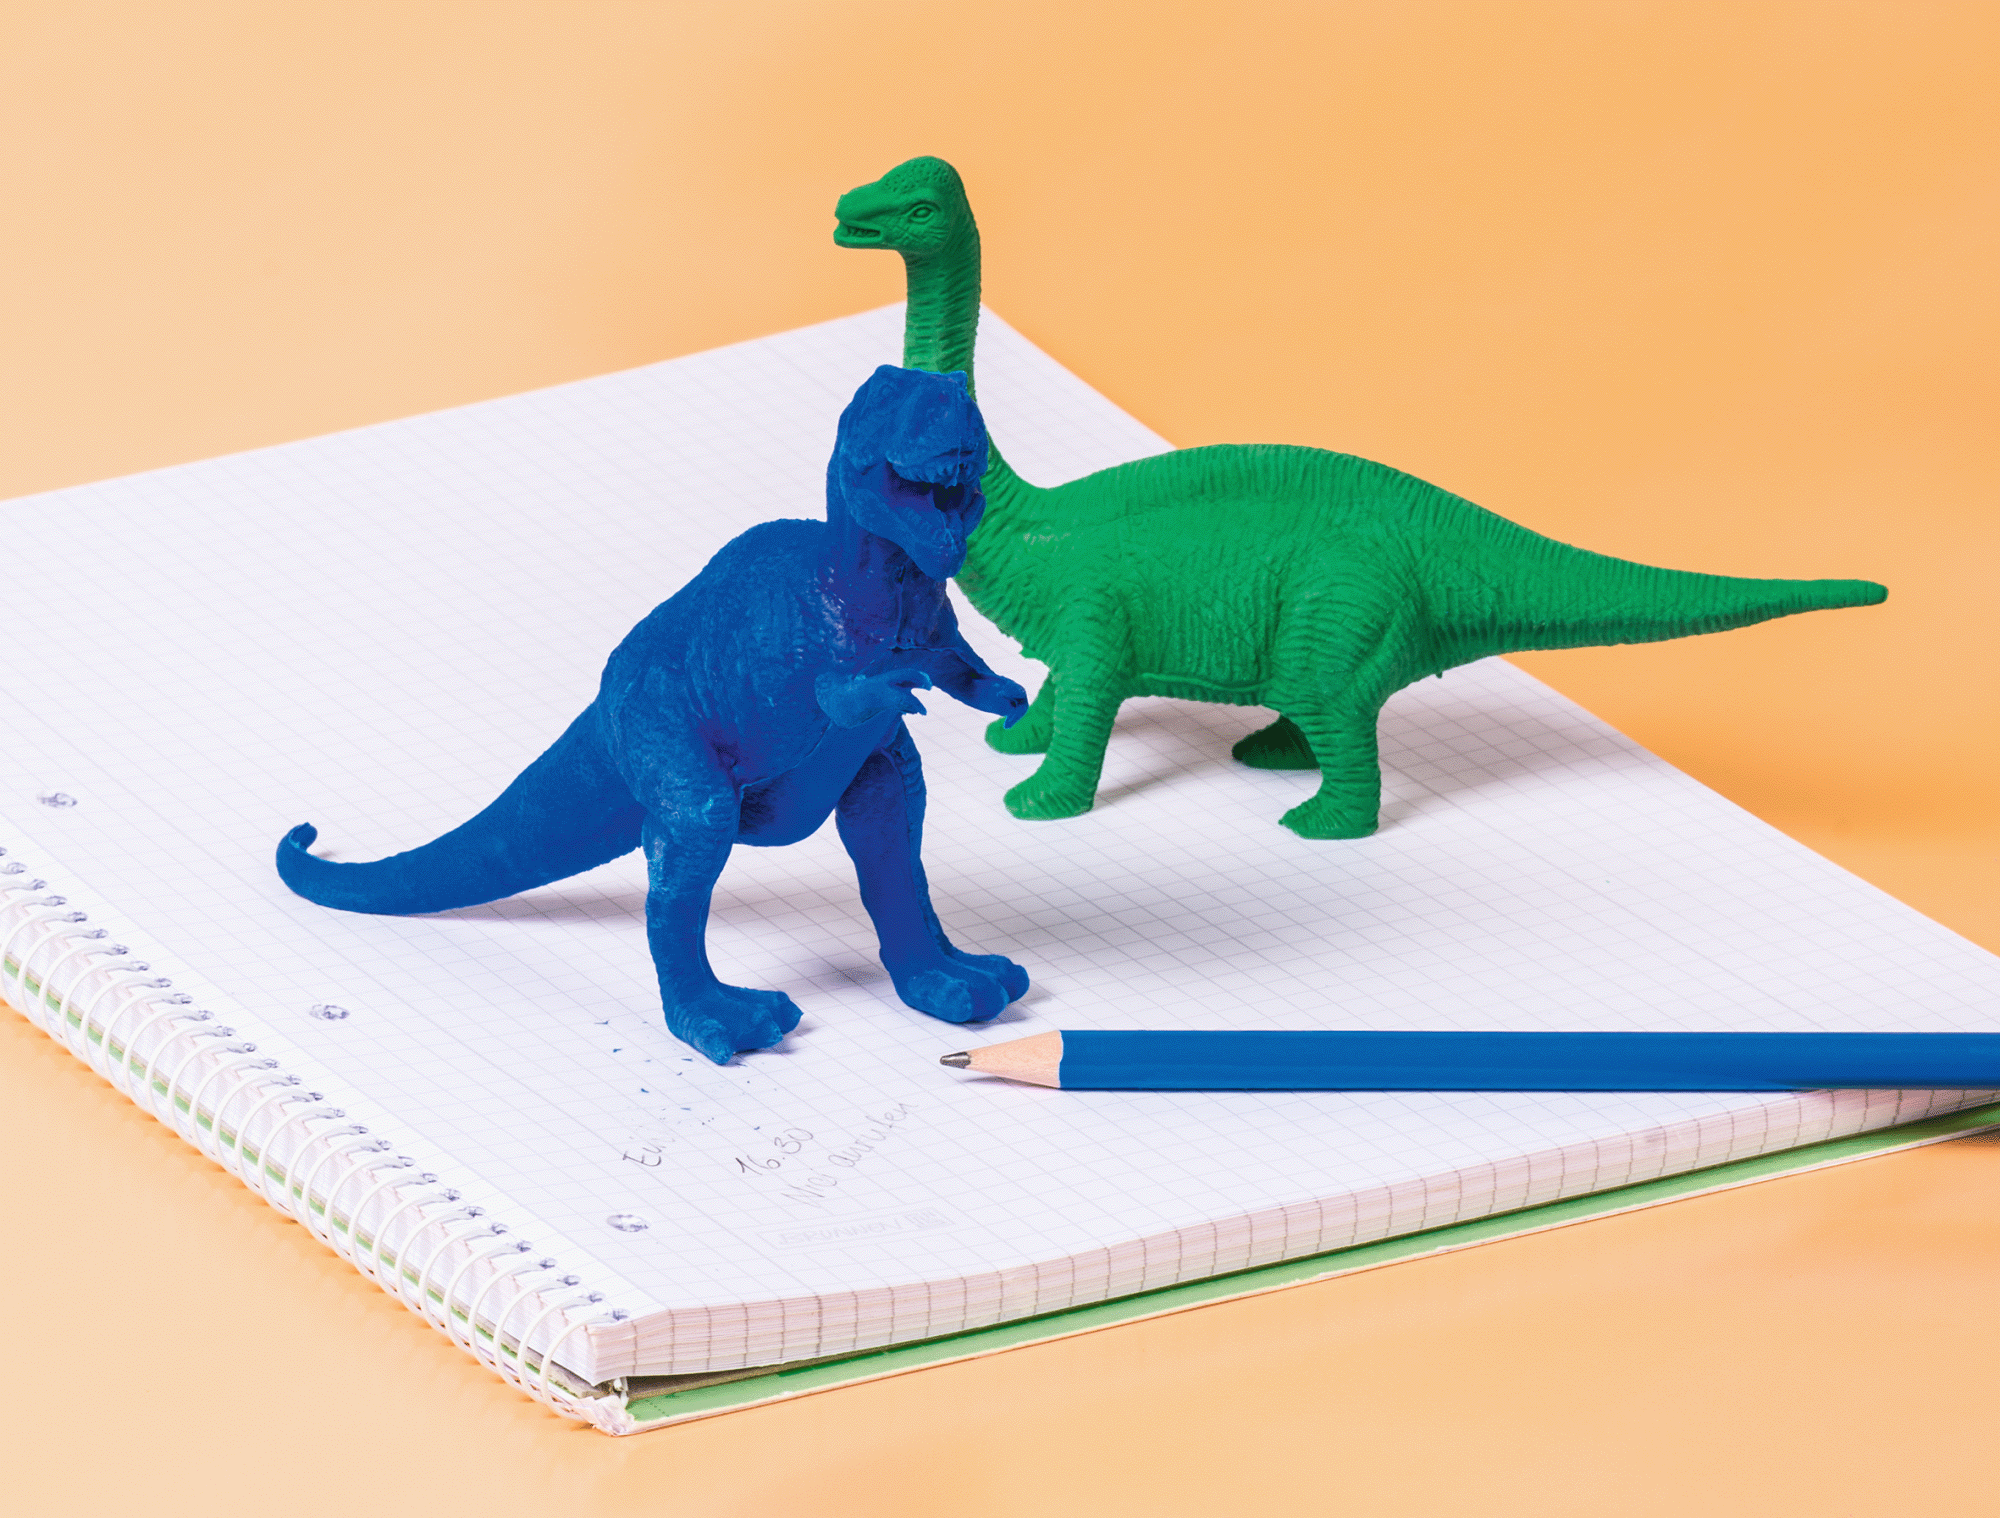 8 Teile/satz Mini Radiergummi Dinosaurier Ei Fall Schule Schreibwaren Bürobedarf 